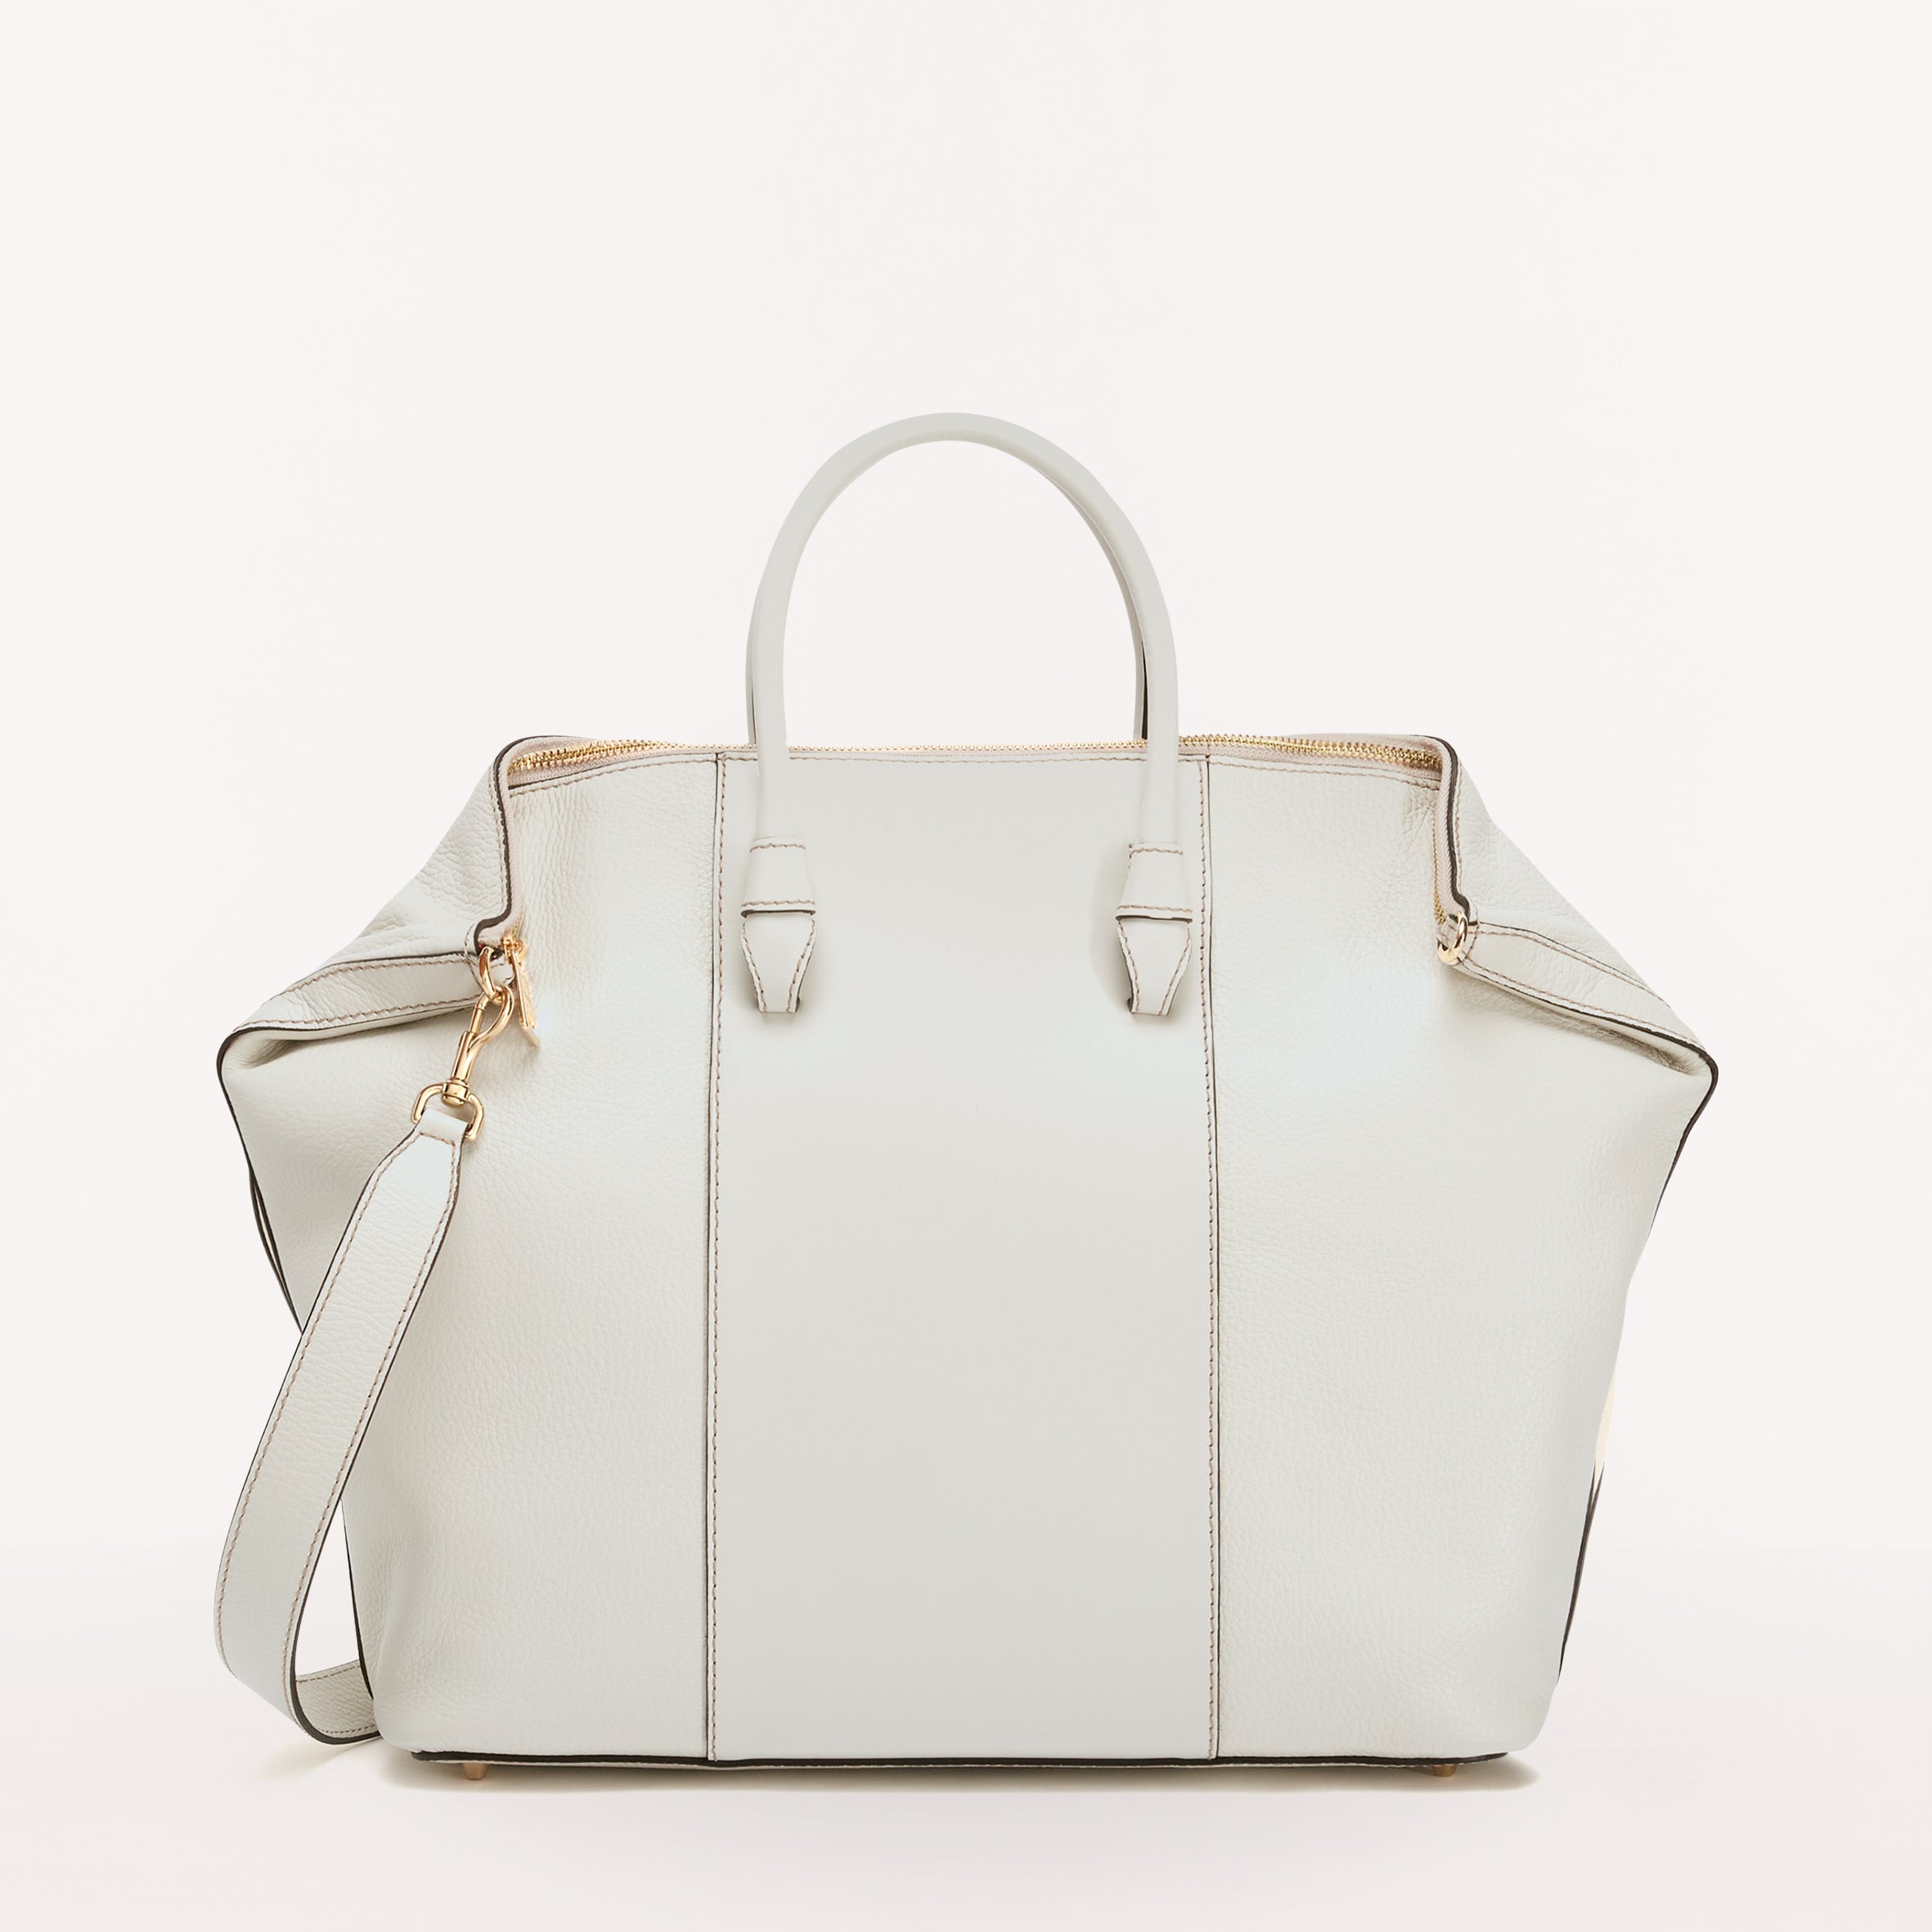 Shop latest trending Furla Marshmallow color Tote Bags Online